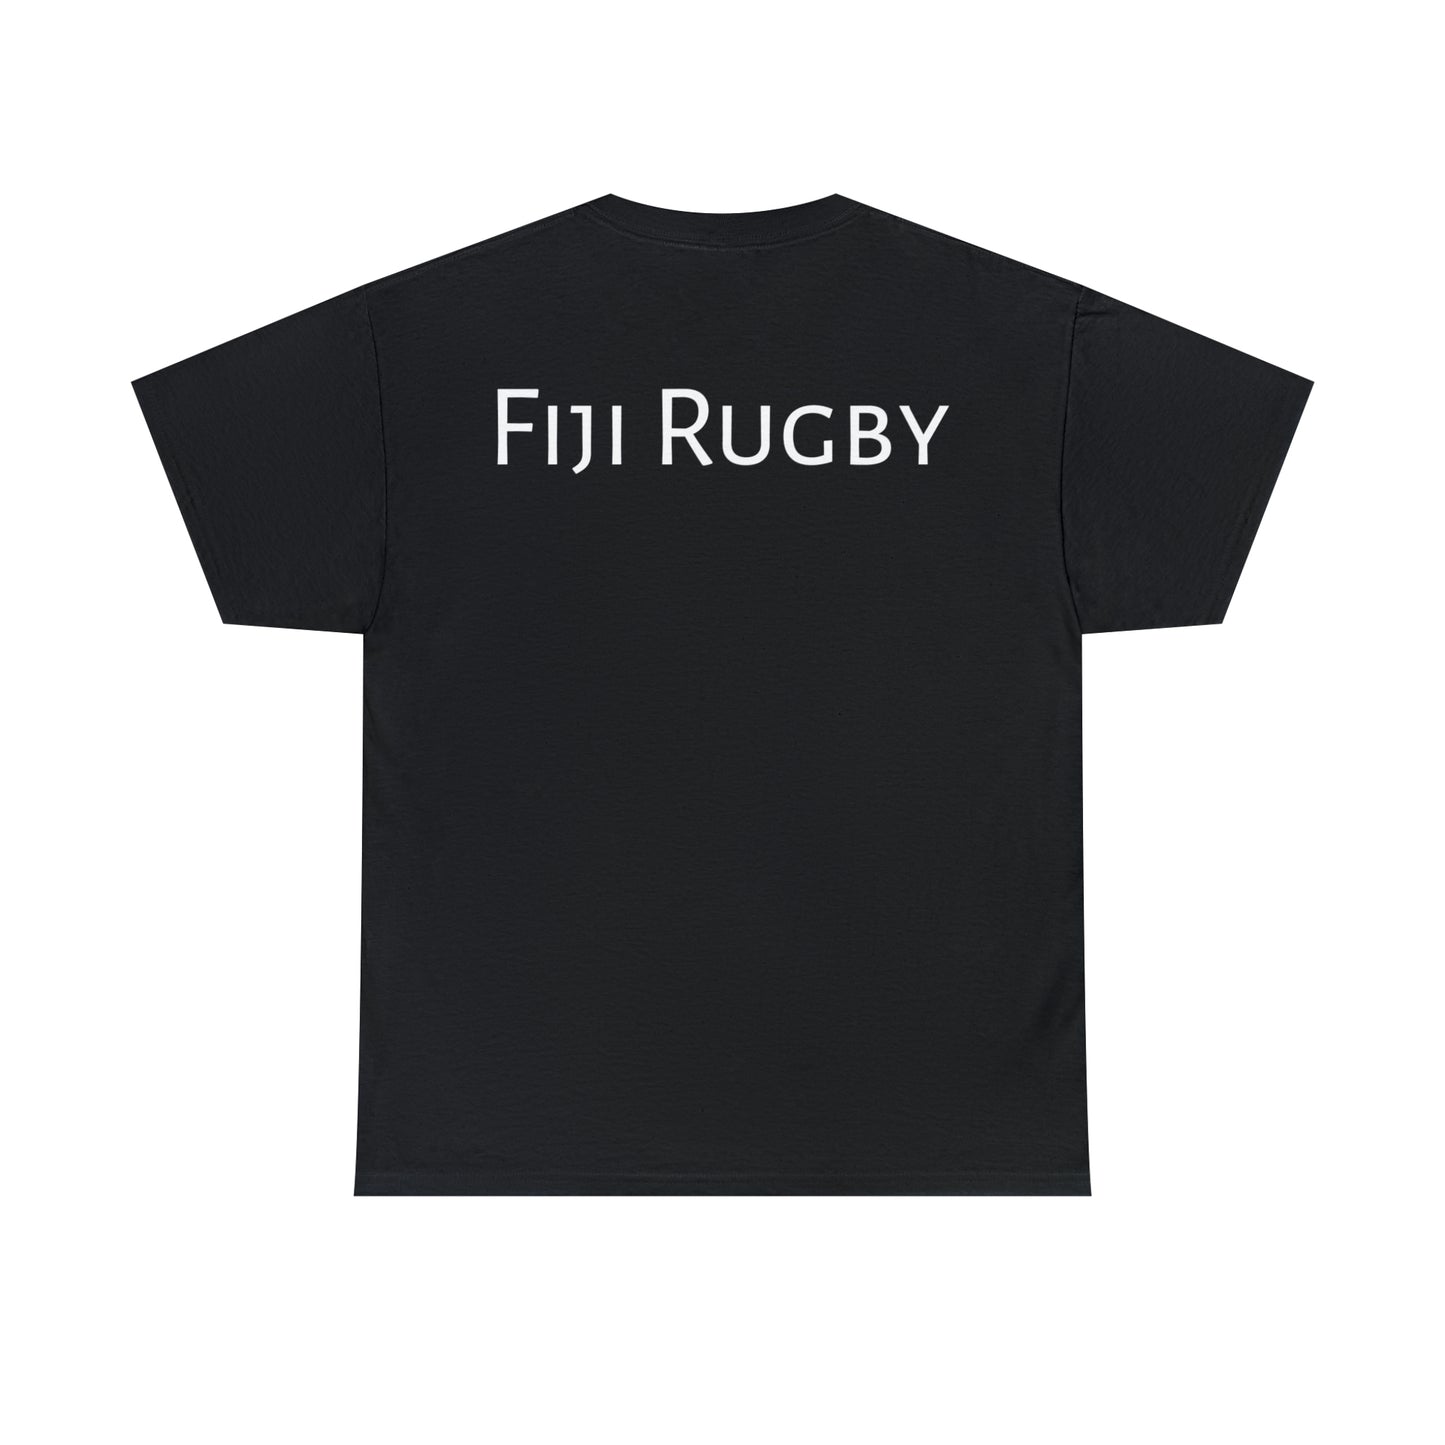 Ready Fiji - black shirt